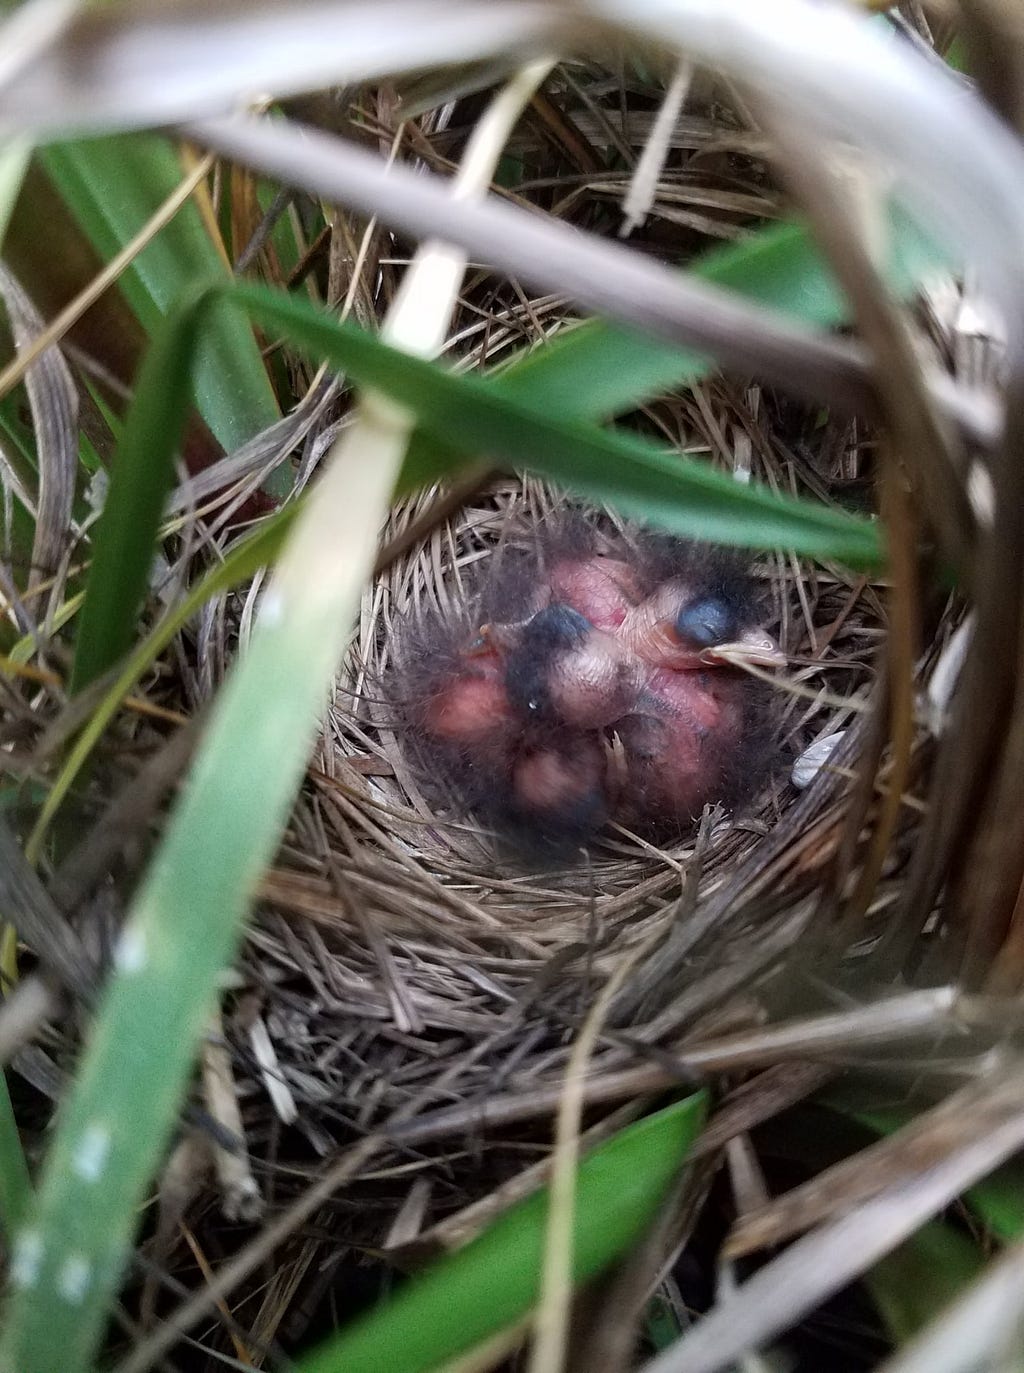 Salmarsh sparrow nest with three chicks in cordgrass